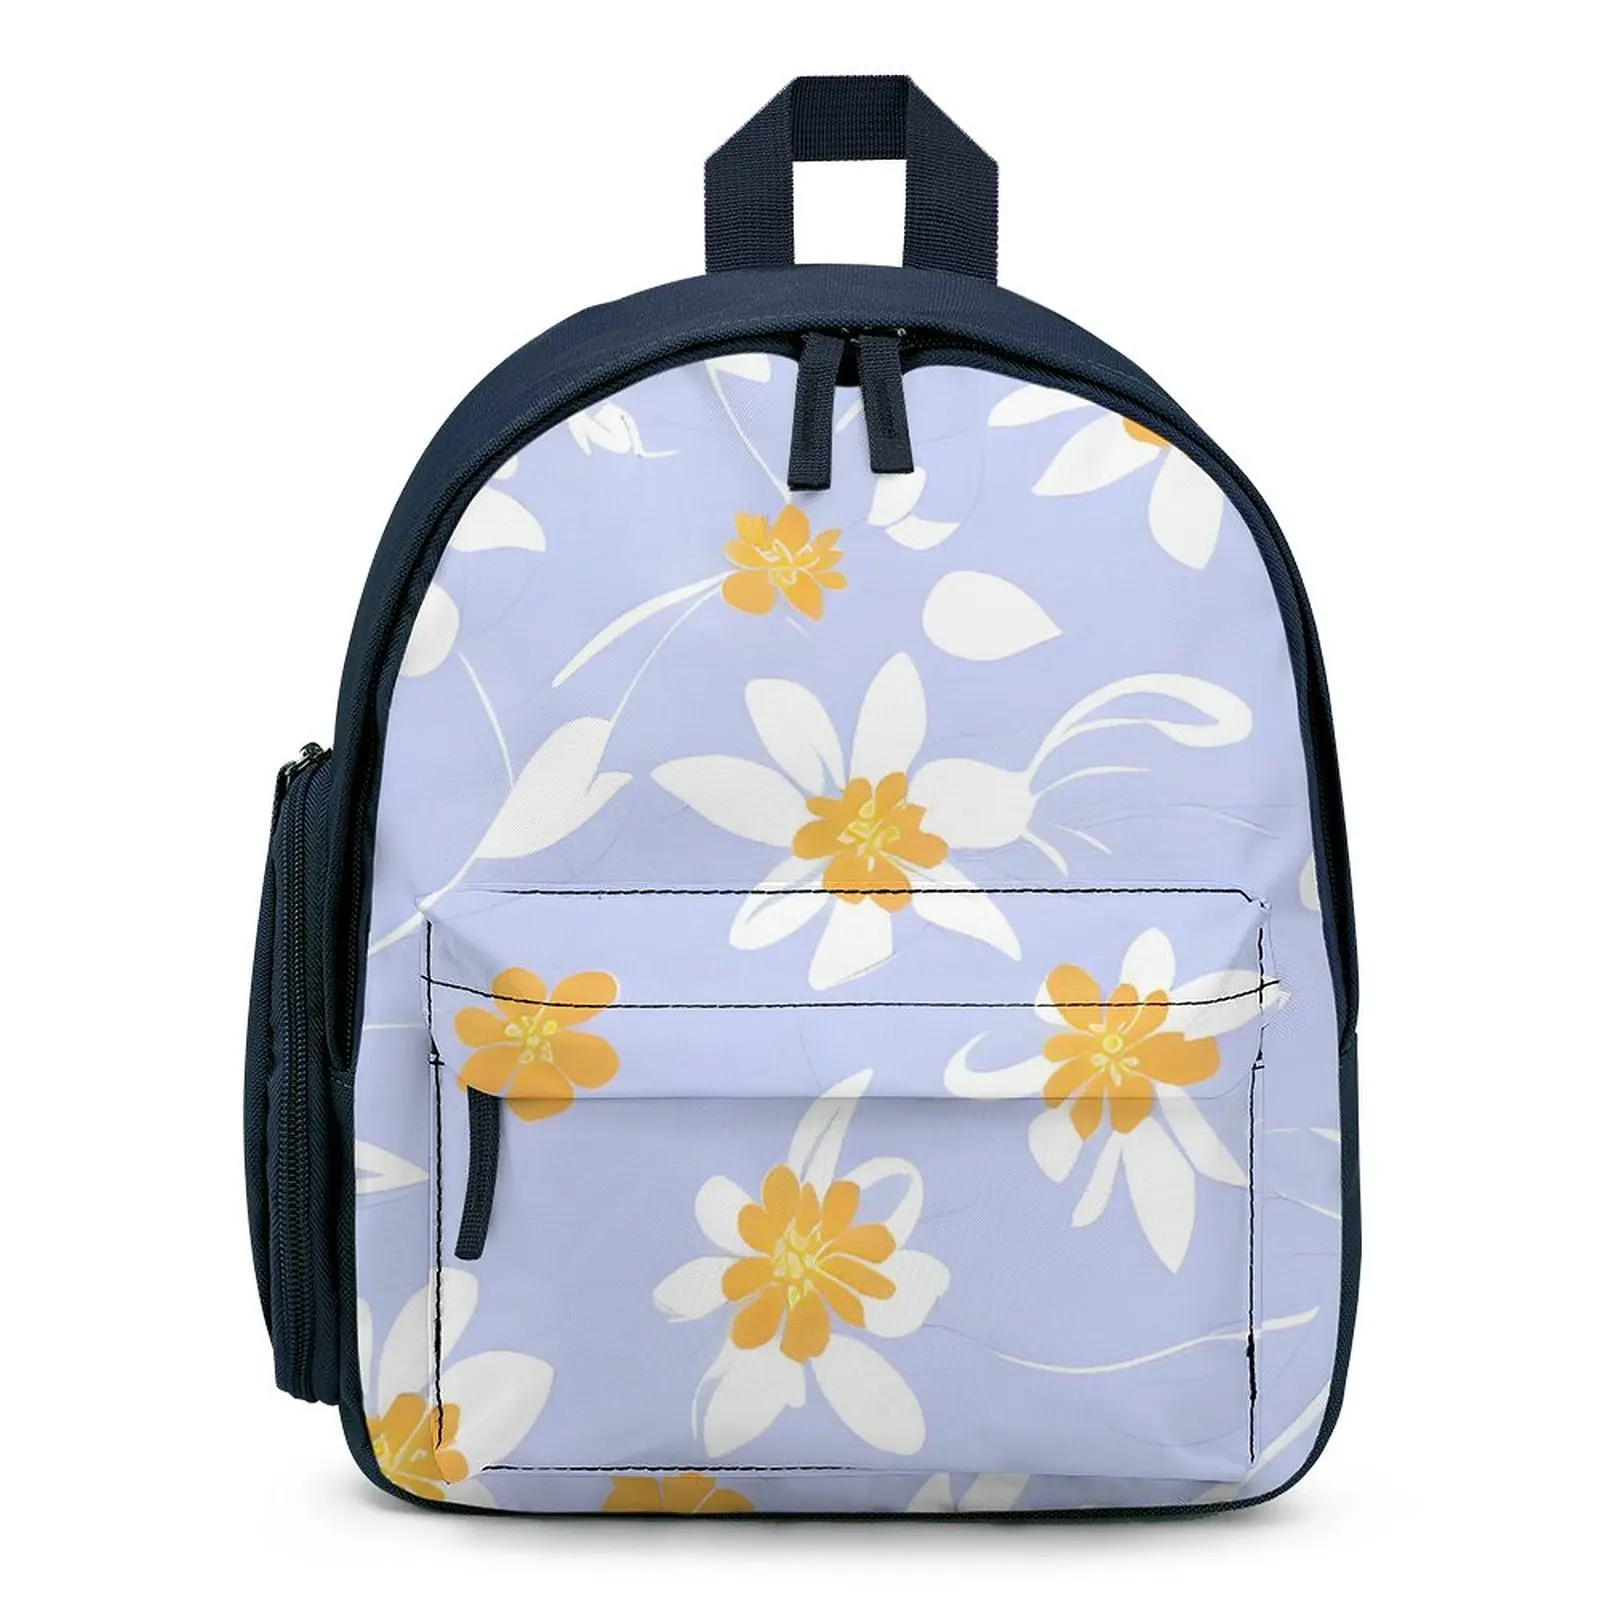 Full Printing Floral Backpack Children's Satchel Pencilbag for Girl Custom Bags with Chains Straps Custom Print